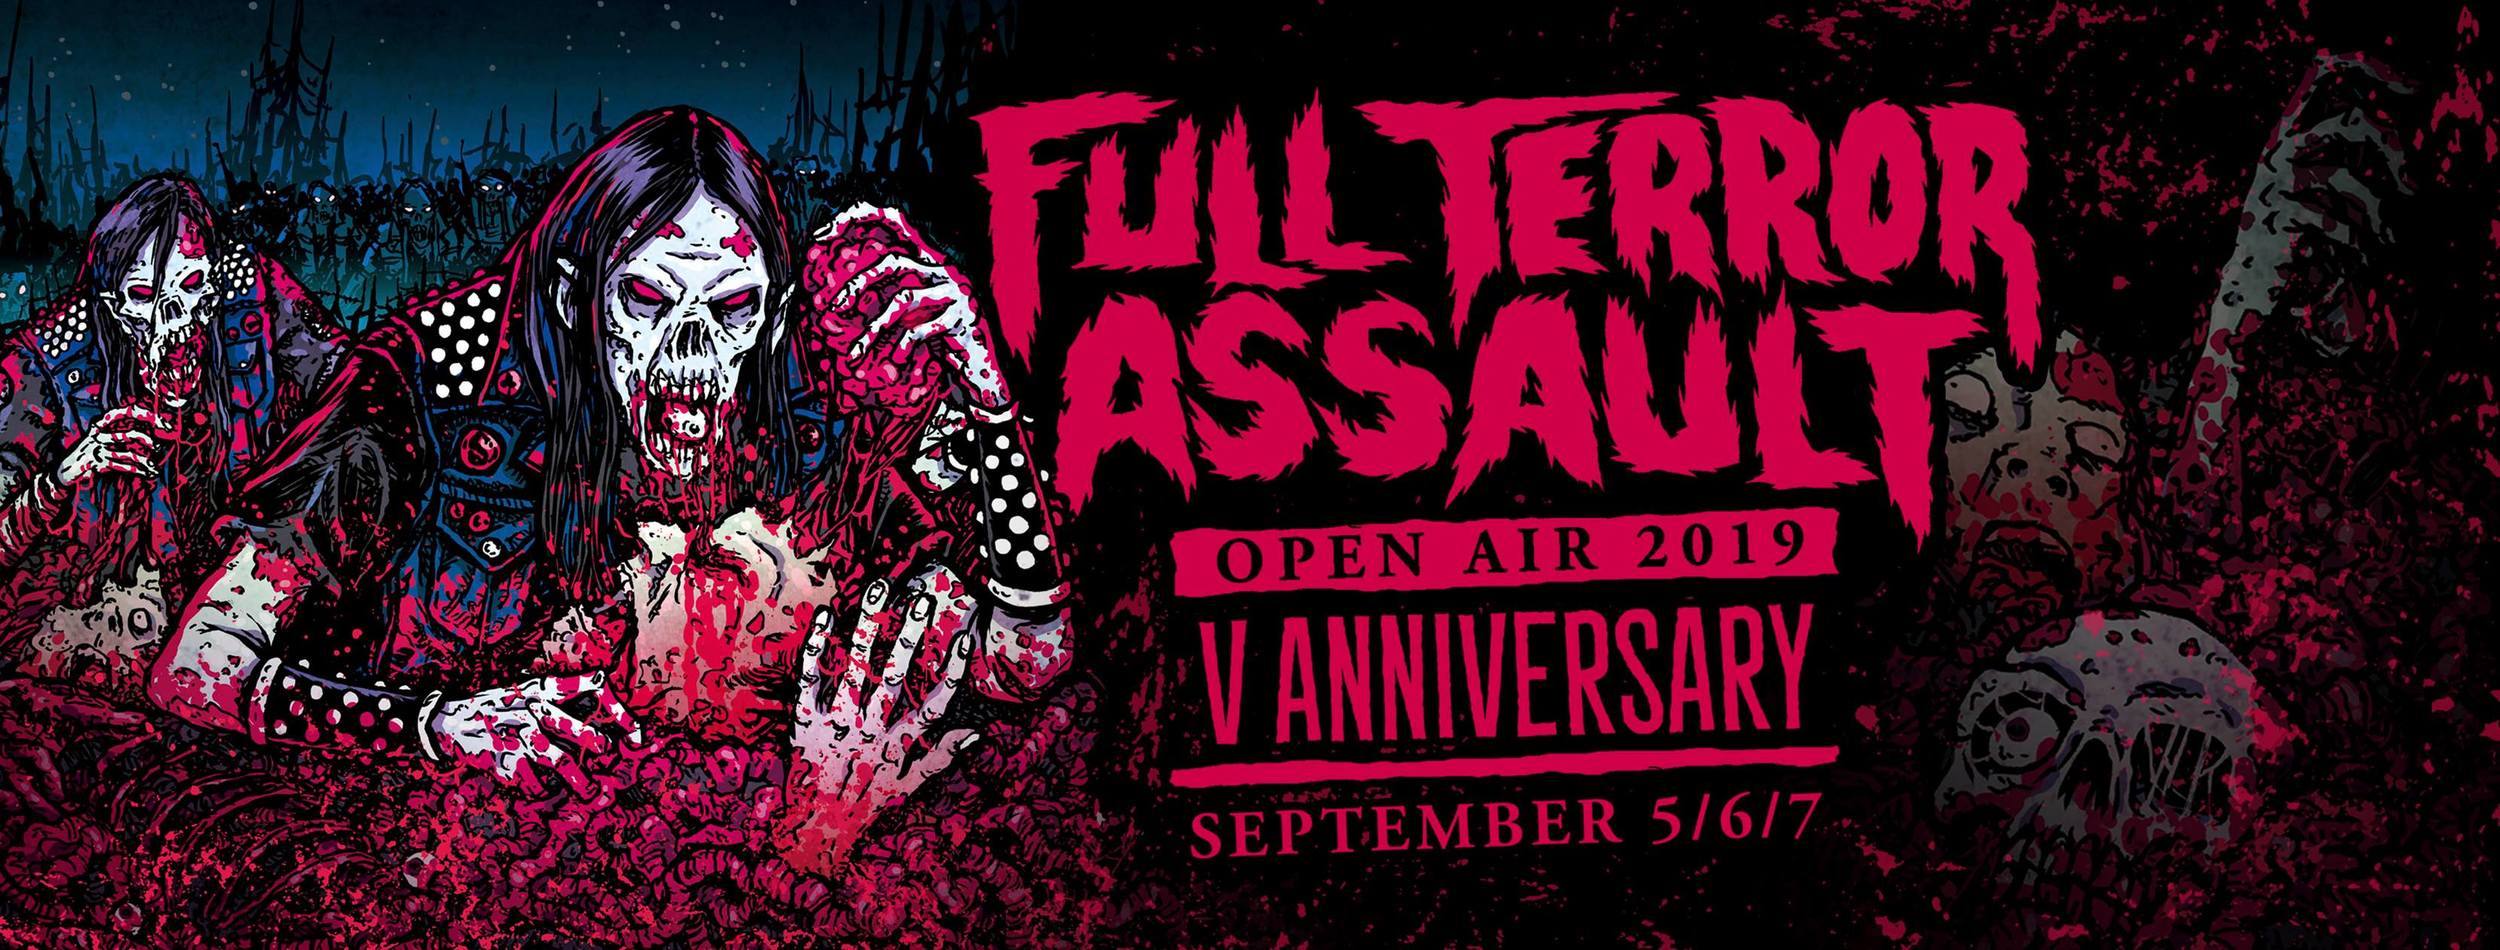 Full Terror Assault 2019 Metal Festival